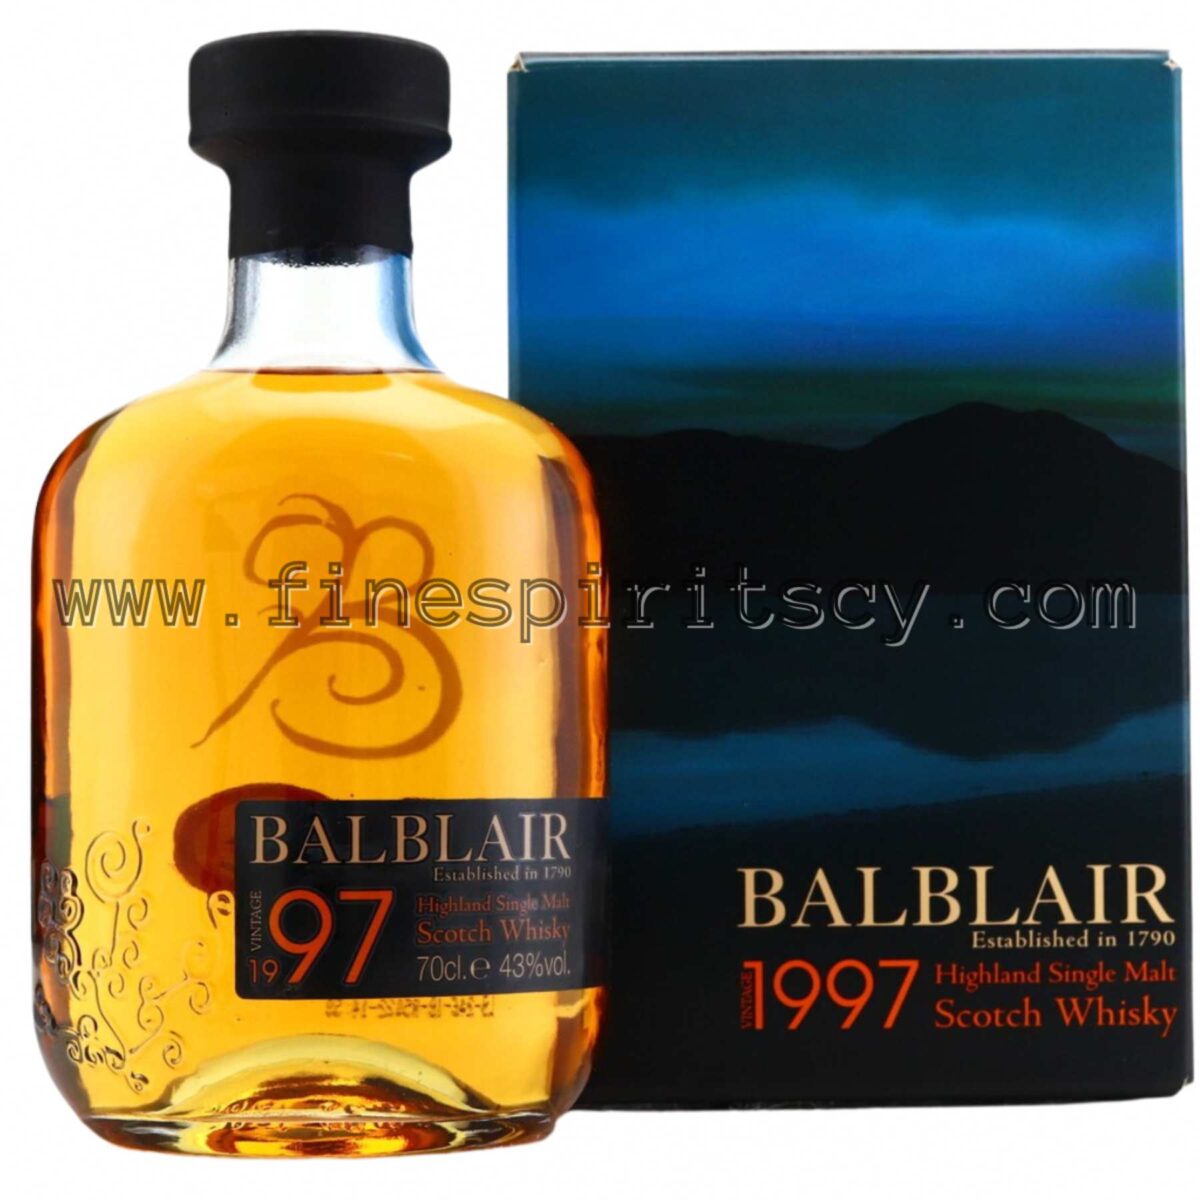 Balblair 1997 Vintage 2009 FSCY Cyprus Price Order Online 700ml 70cl 0.7l